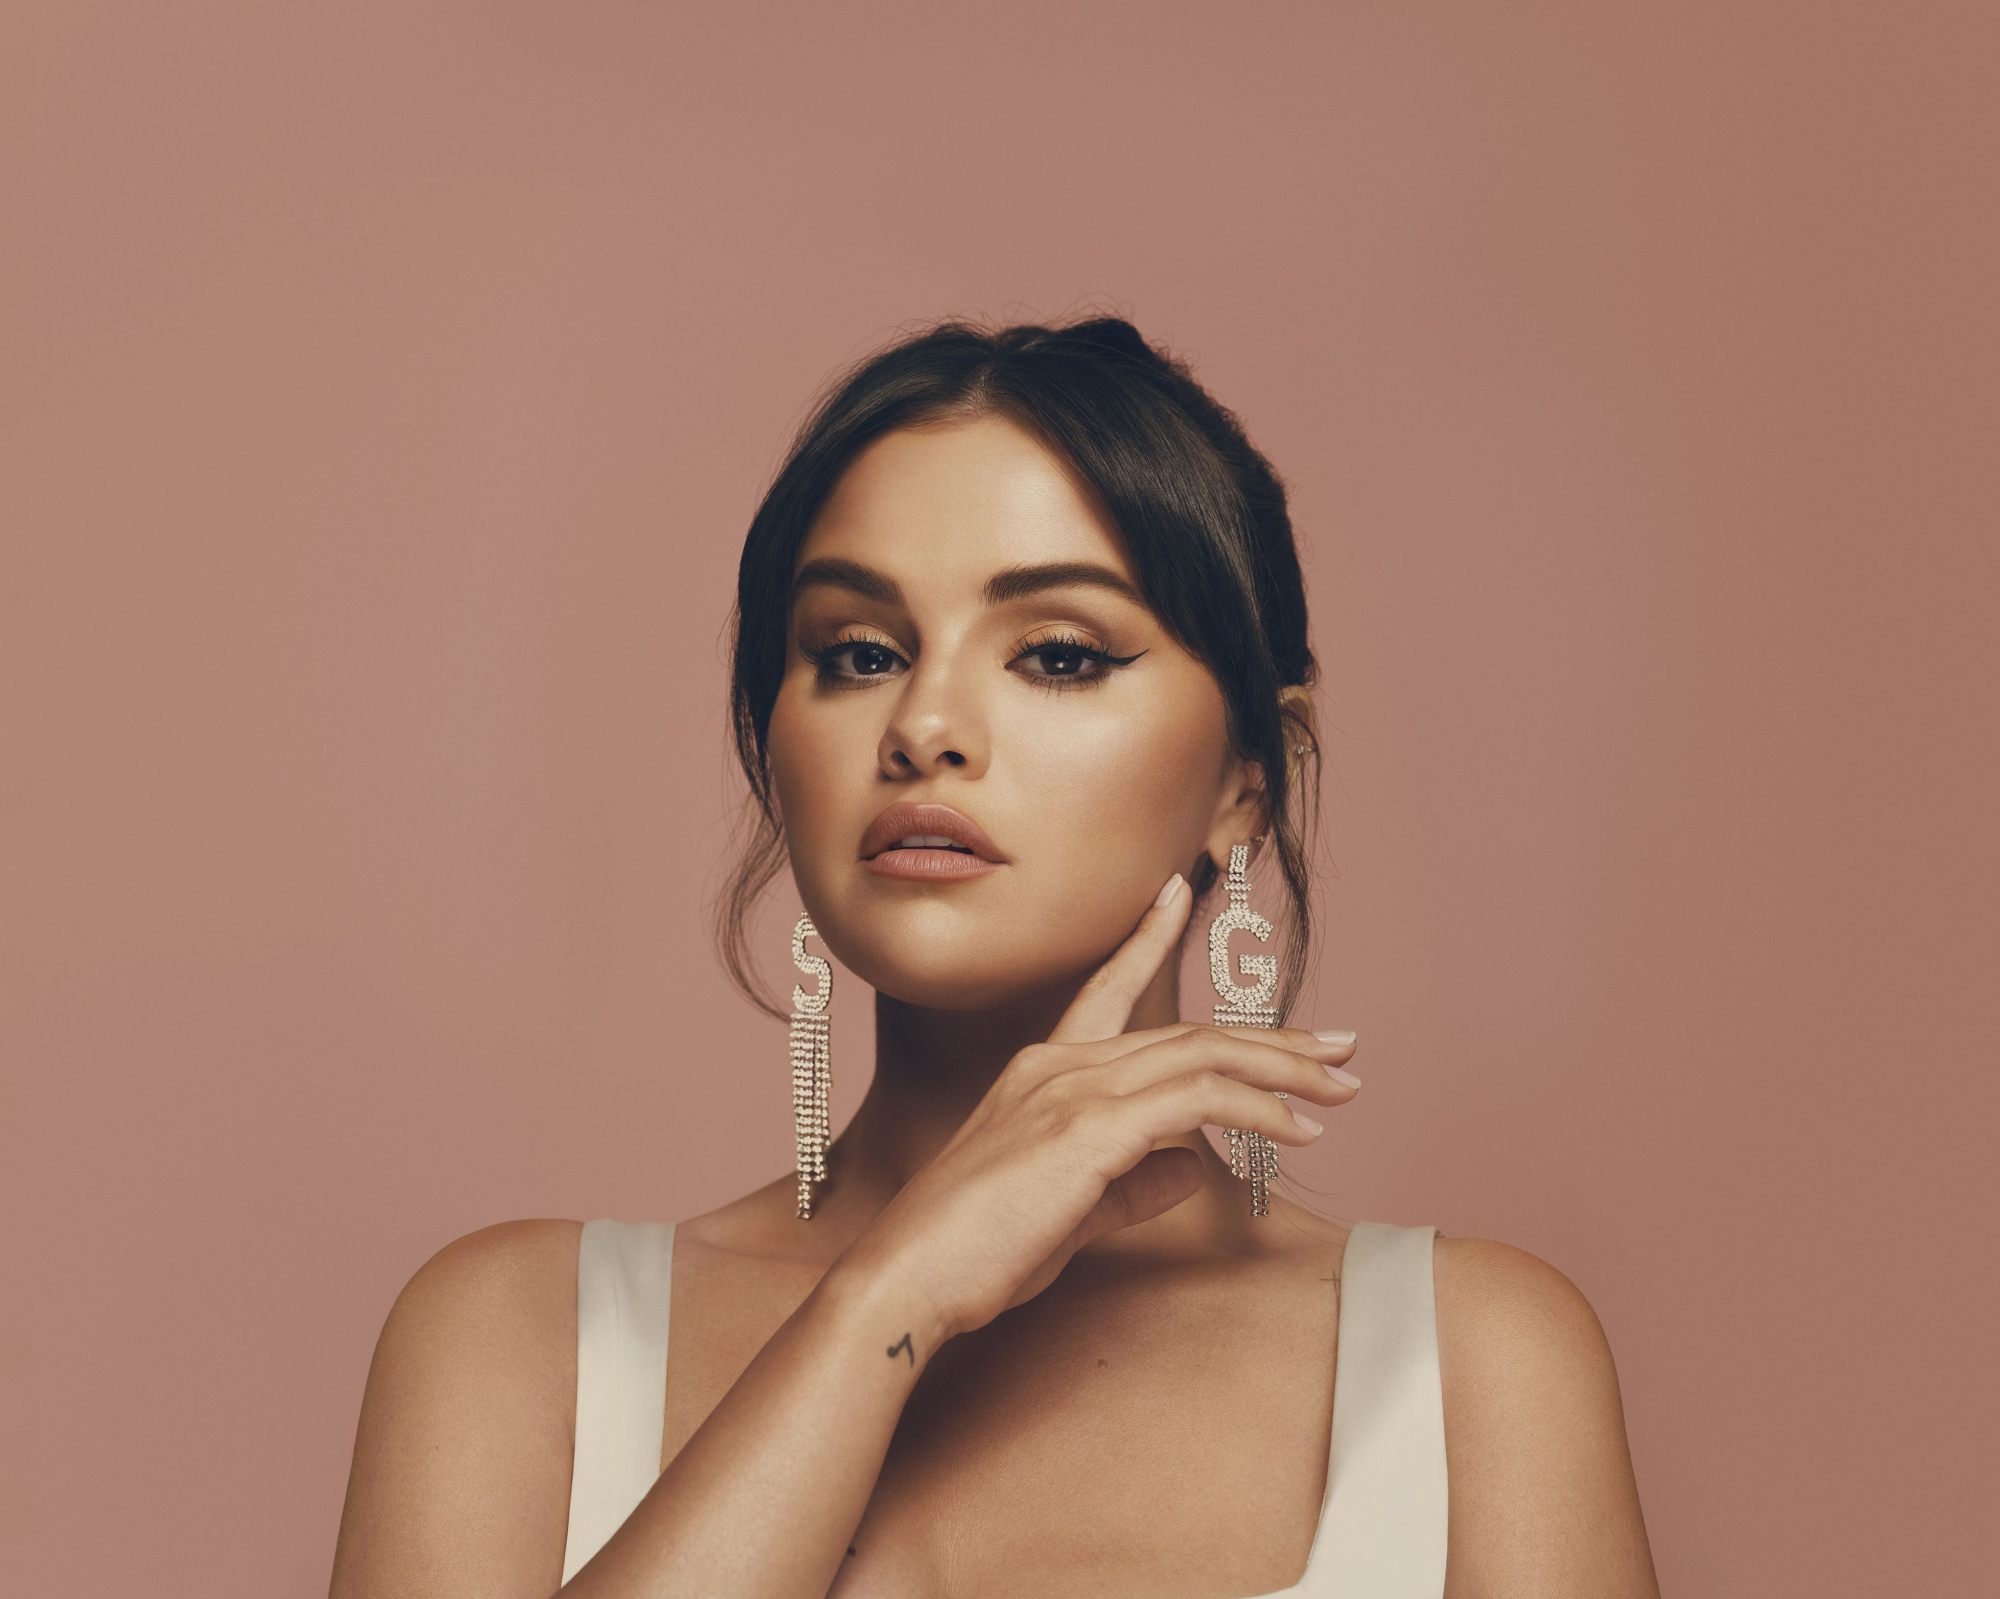 2000x1599 Selena Gomez for Rare Beauty 2000x1599 Resolution Wallpaper ...